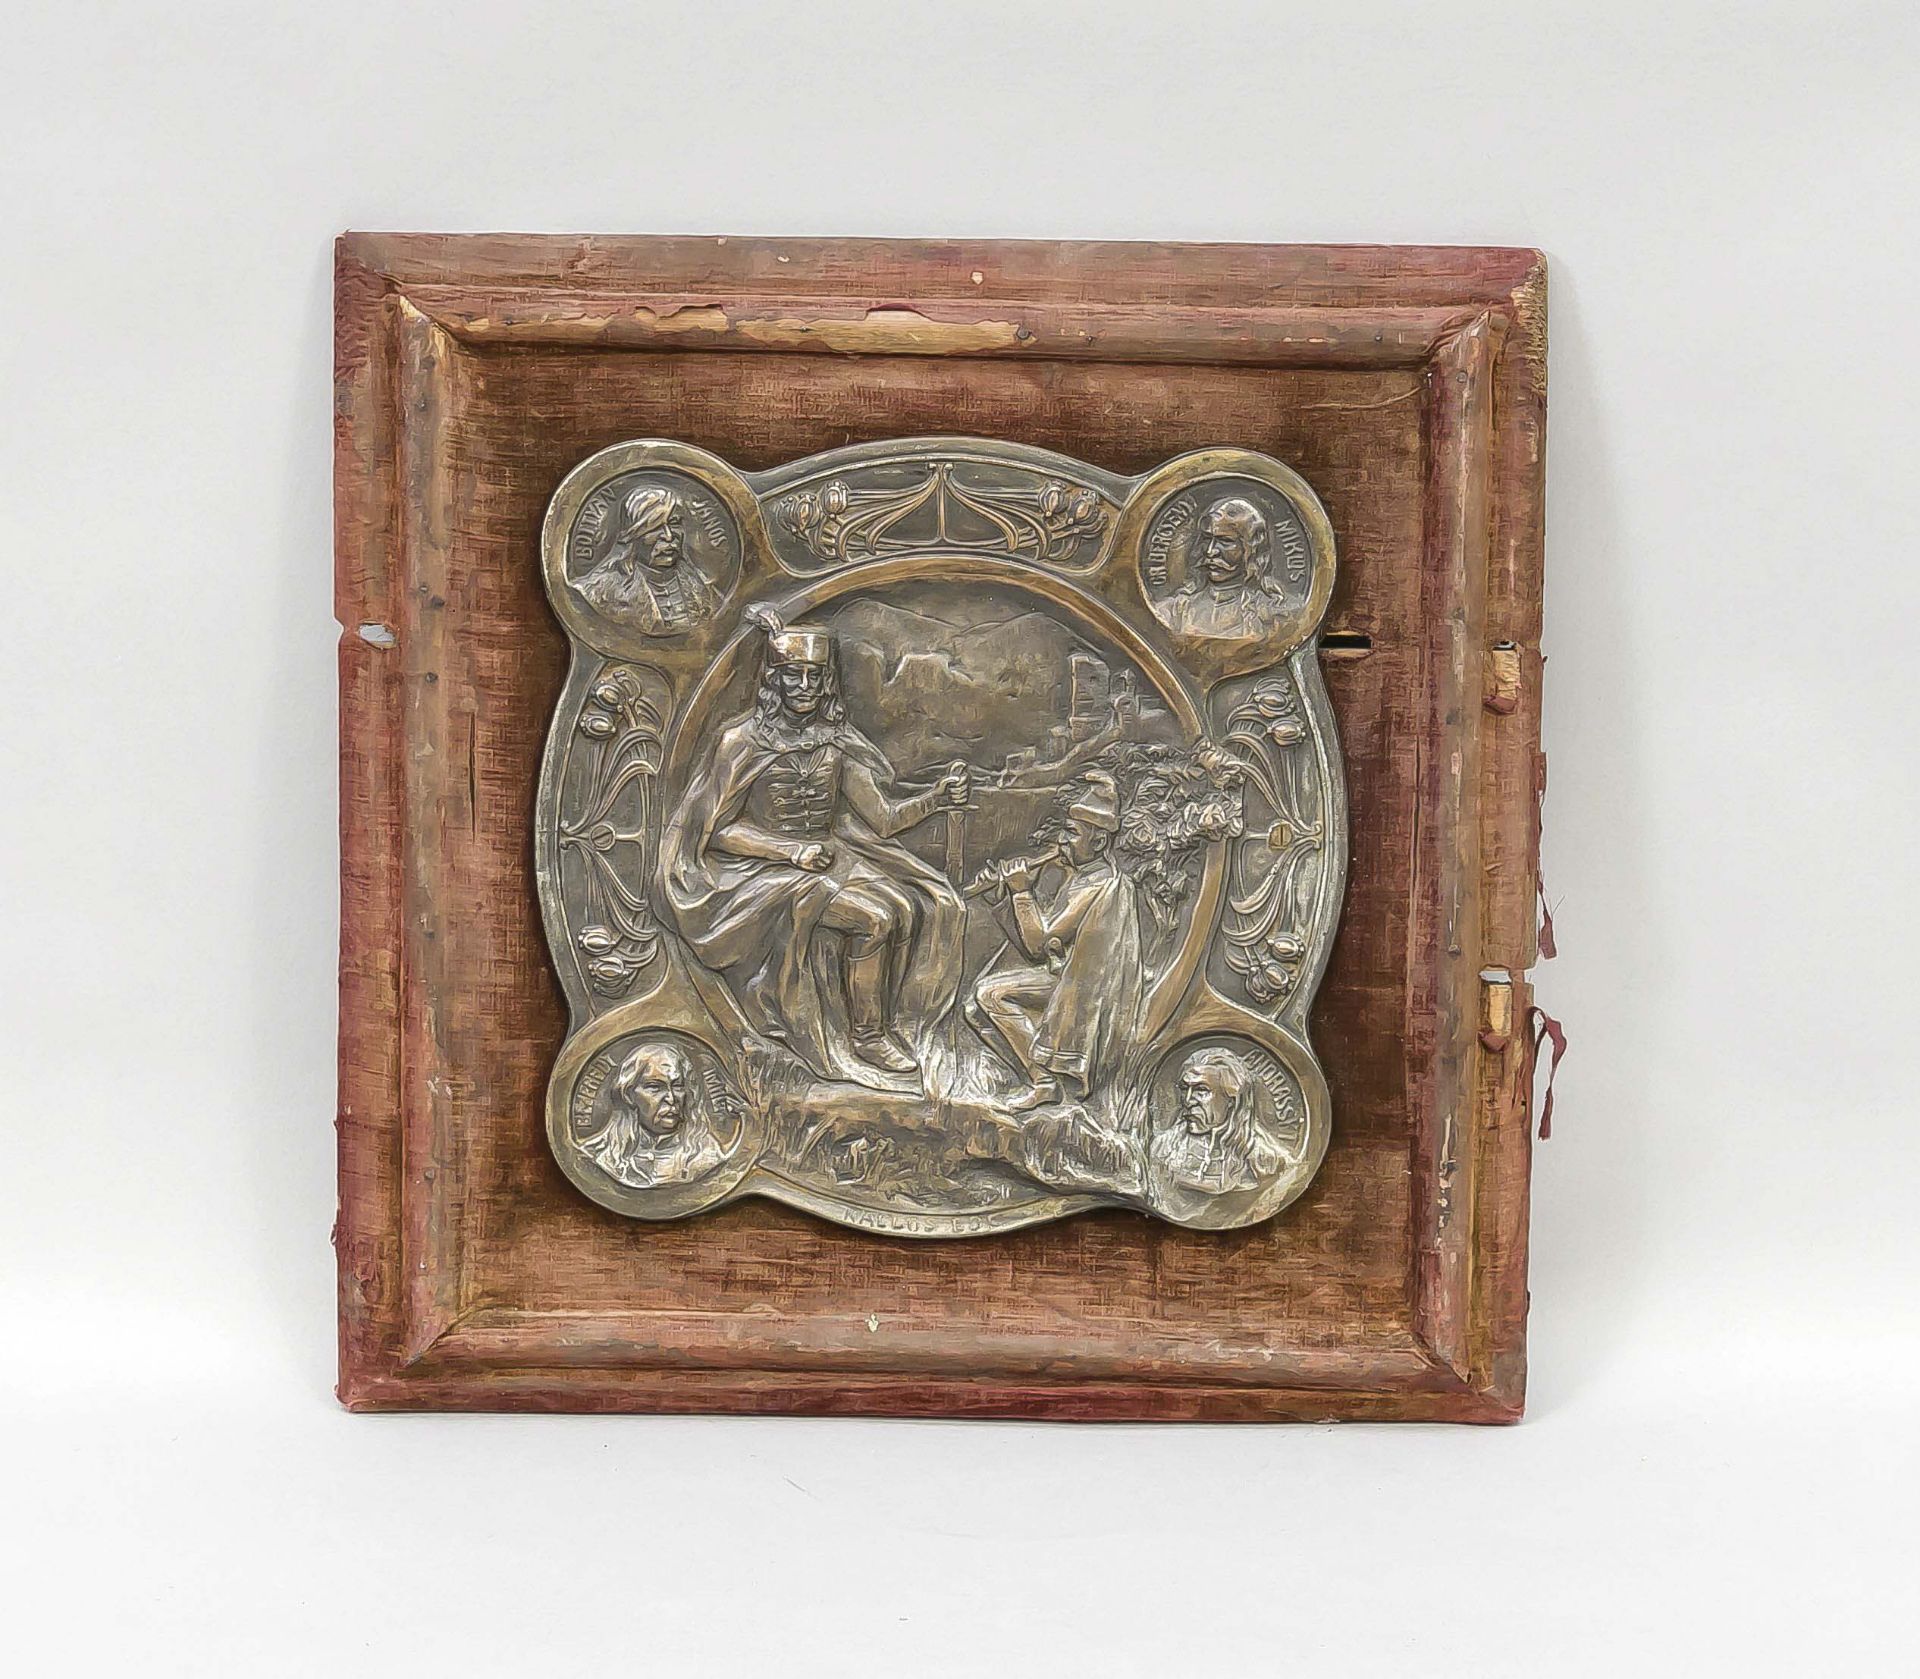 Rakoczy relief by Eduard (Ede) Kallos (1866-1950), Hungary, c. 1900, copper-plated cast iron,